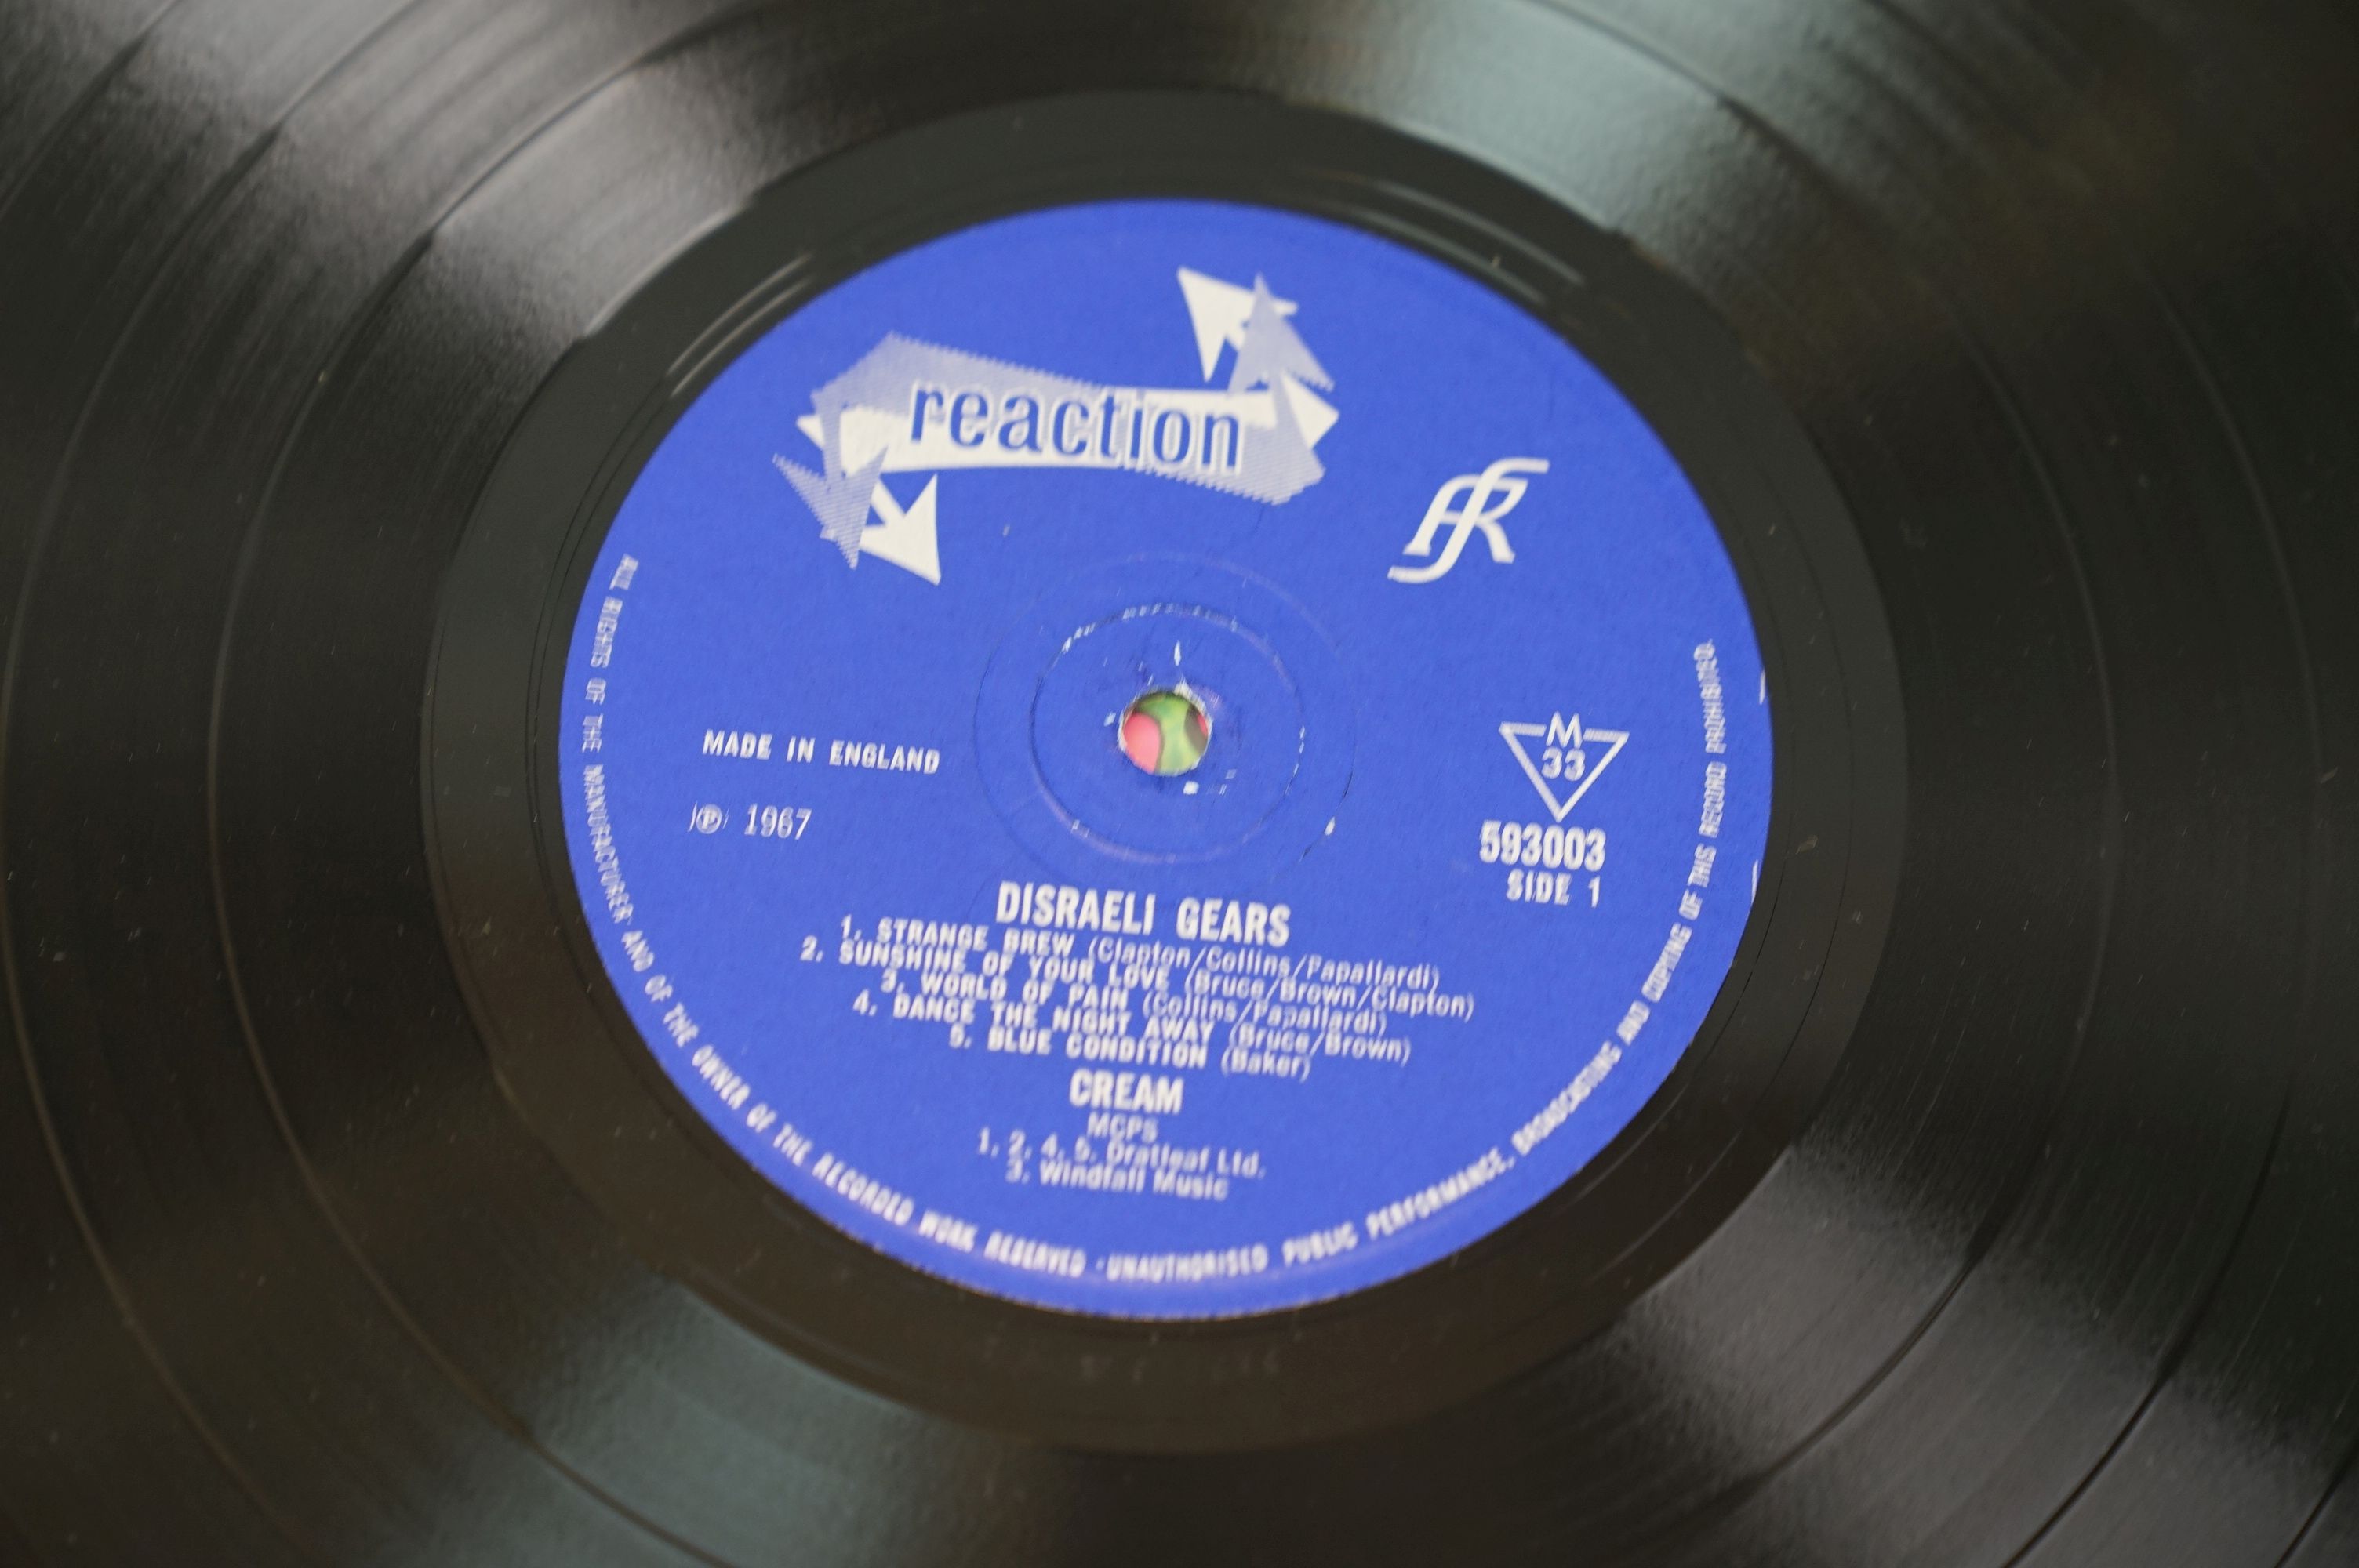 Vinyl - Cream Disreali Gears LP on Reaction 593003 mono, laminated sleeve sleeve and vinyl vg++, - Image 7 of 7